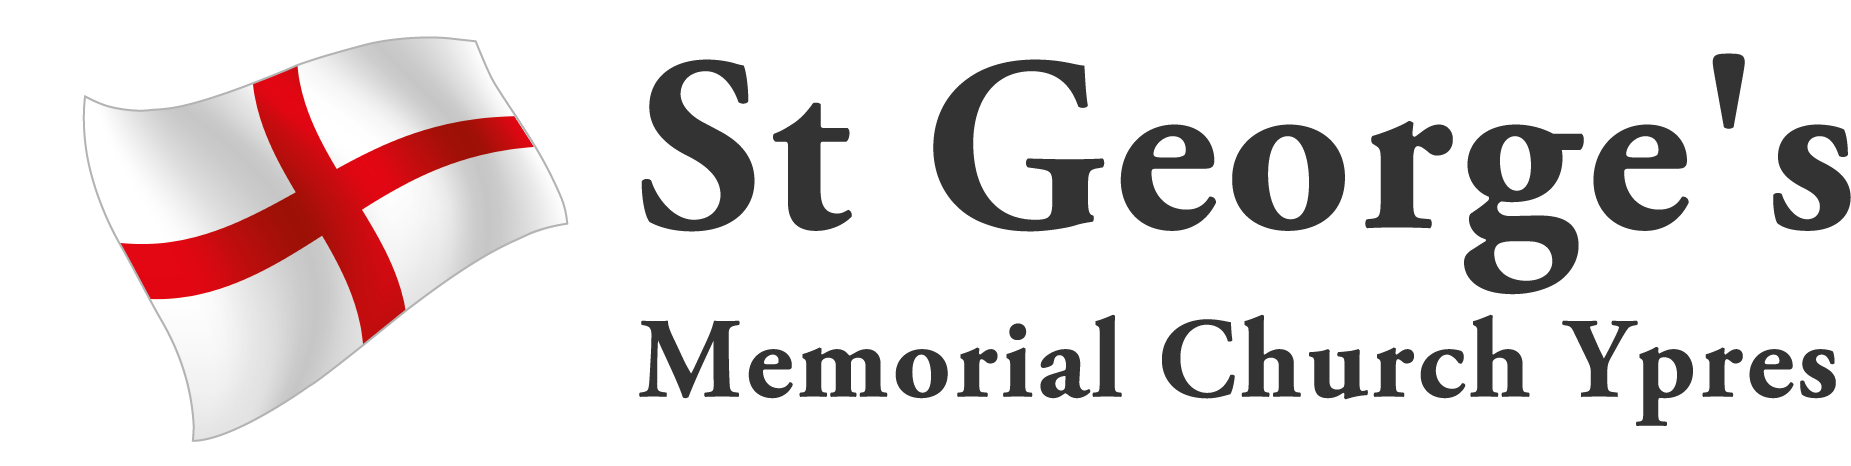 St George's Church Ypres logo